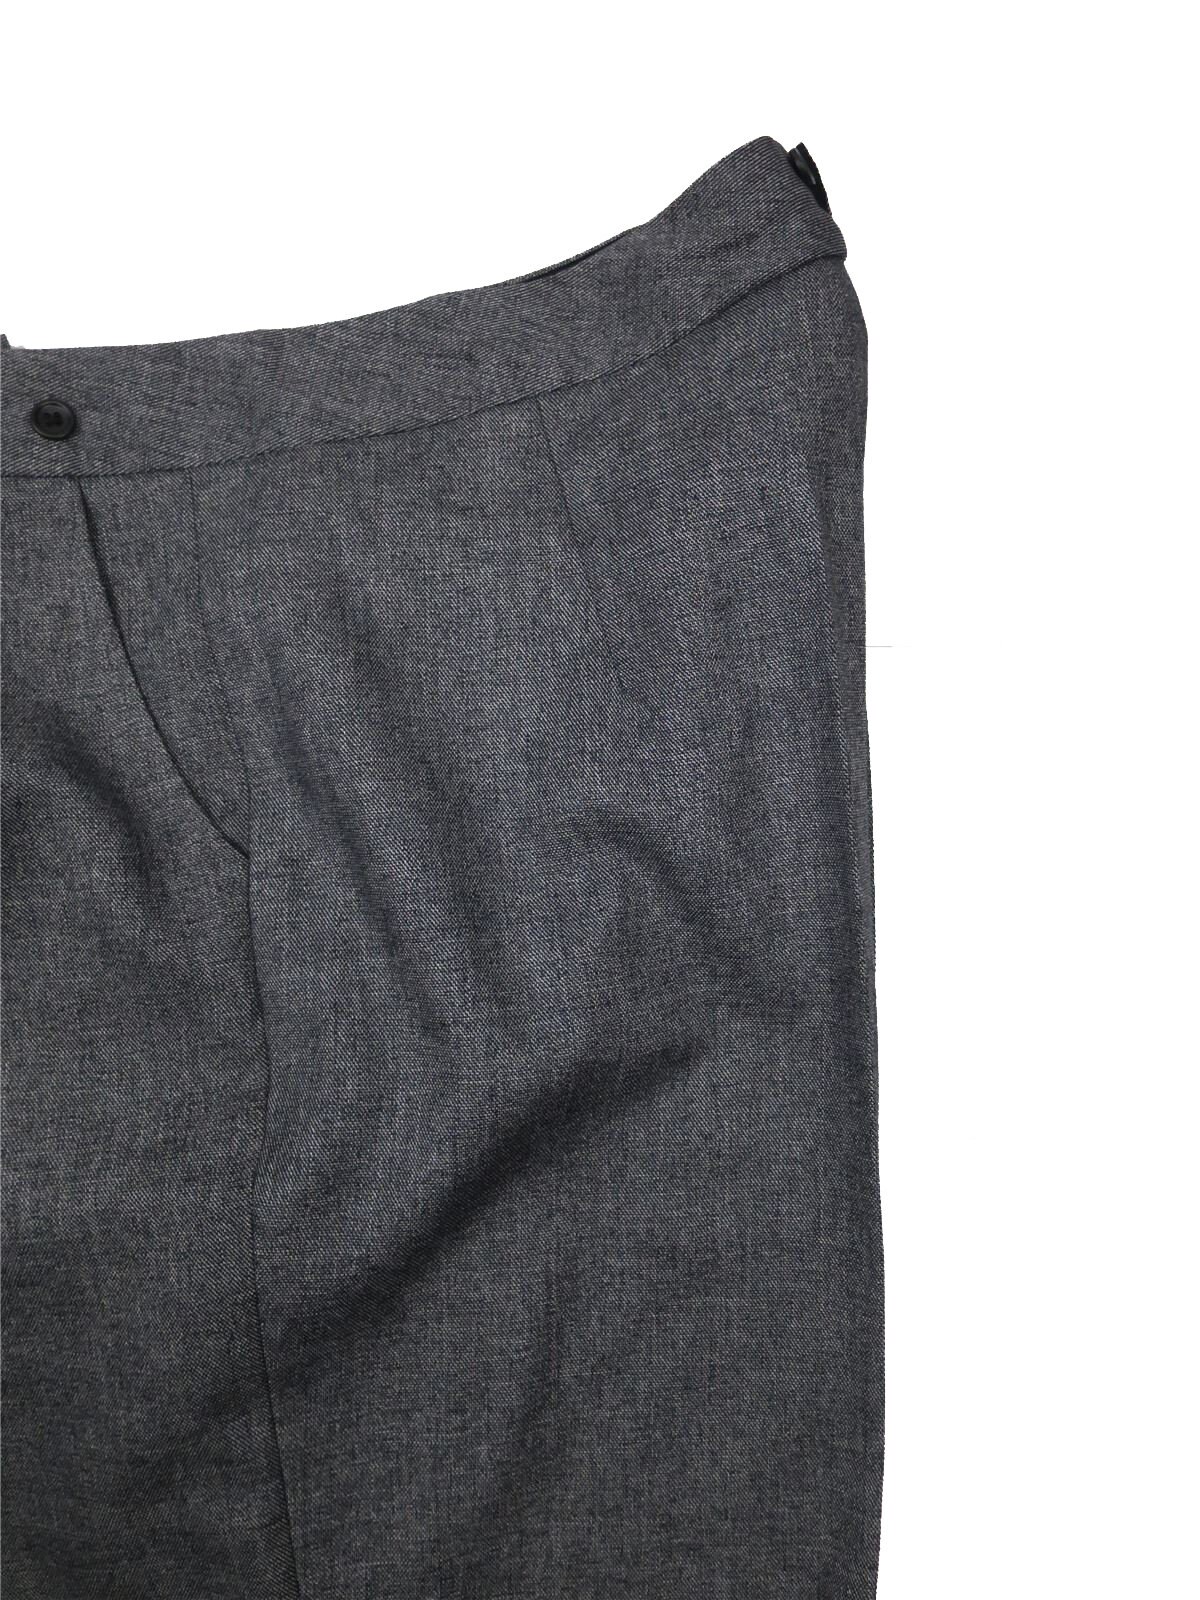 Revival 1940s Crosshatch Black Grey Highwaist Trousers | Etsy